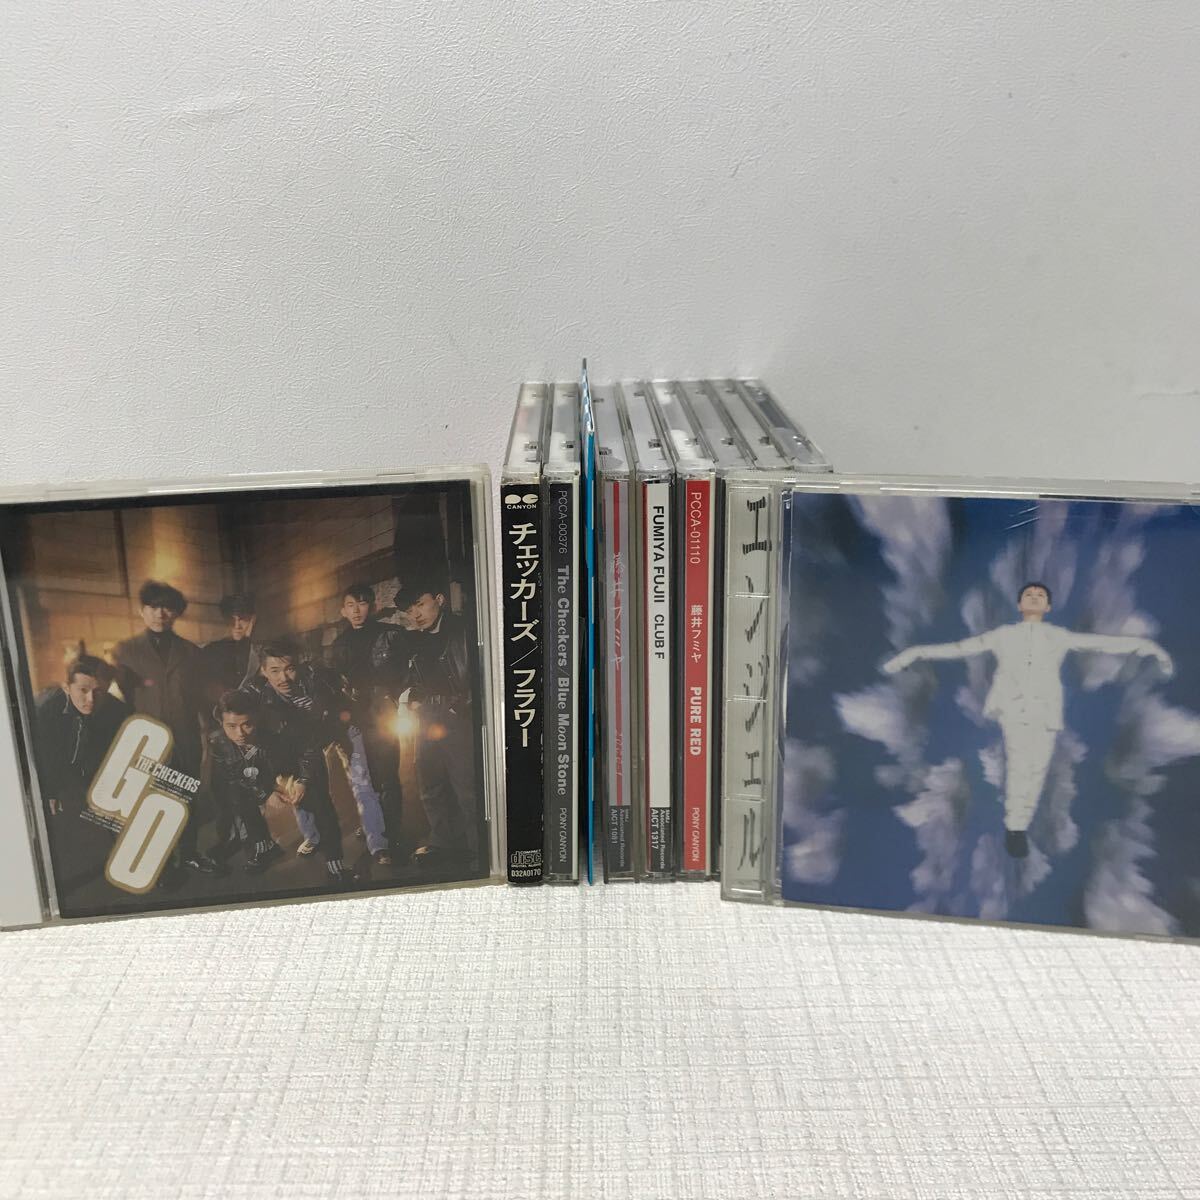 I0415C3 суммировать * Fujii Fumiya The Checkers CD 13 шт комплект музыка Японская музыка / цветок / GO / блокировка n roll / Angel / TEARS / CLUB F др. 